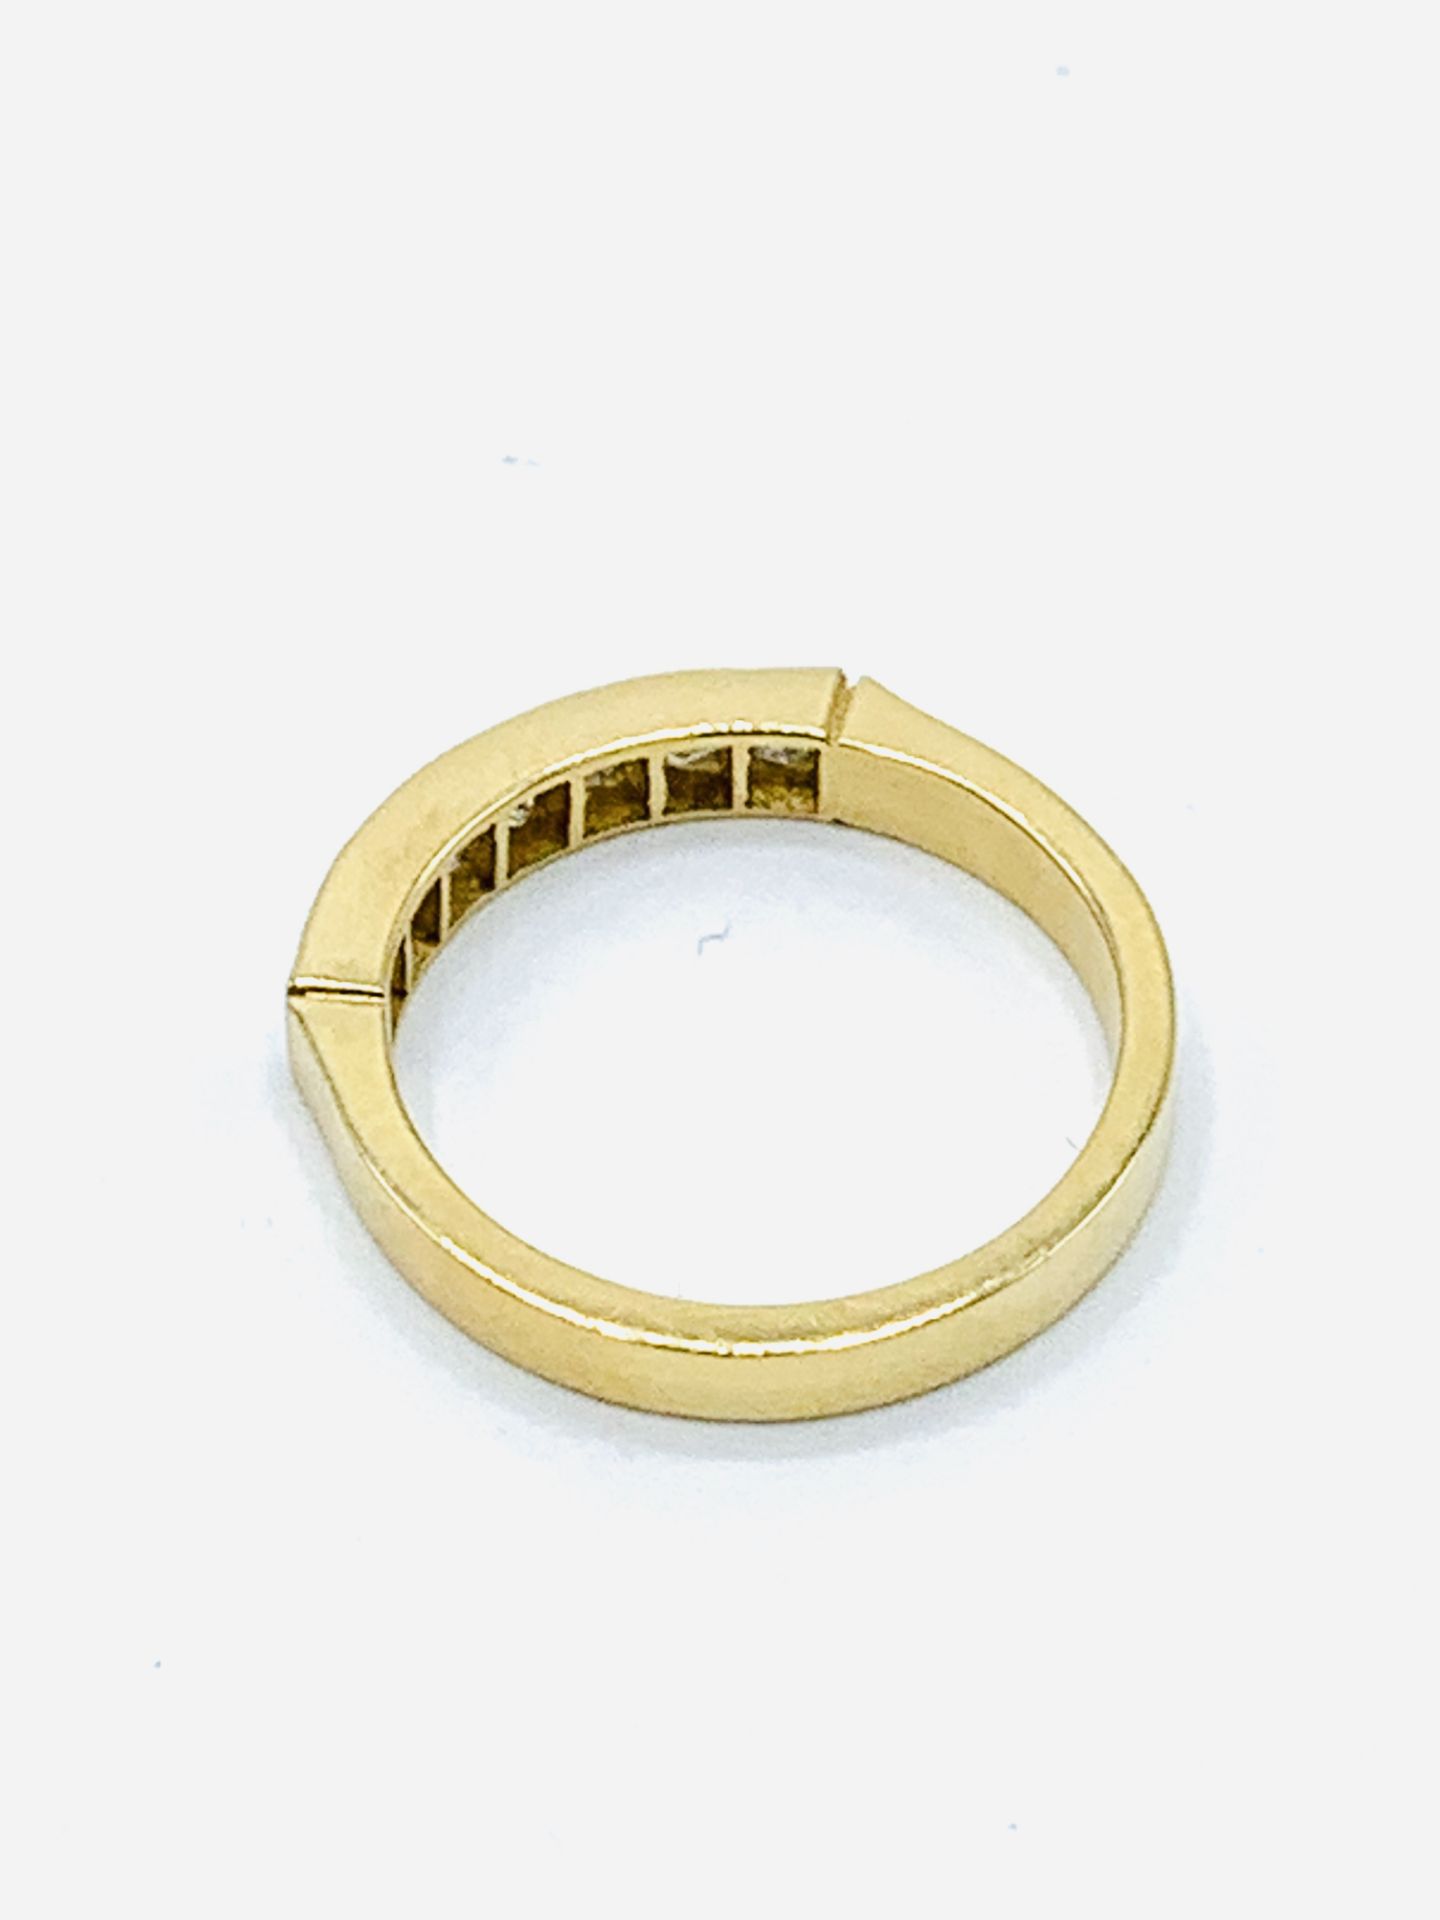 Gold and princess cut diamond ring. - Image 3 of 4